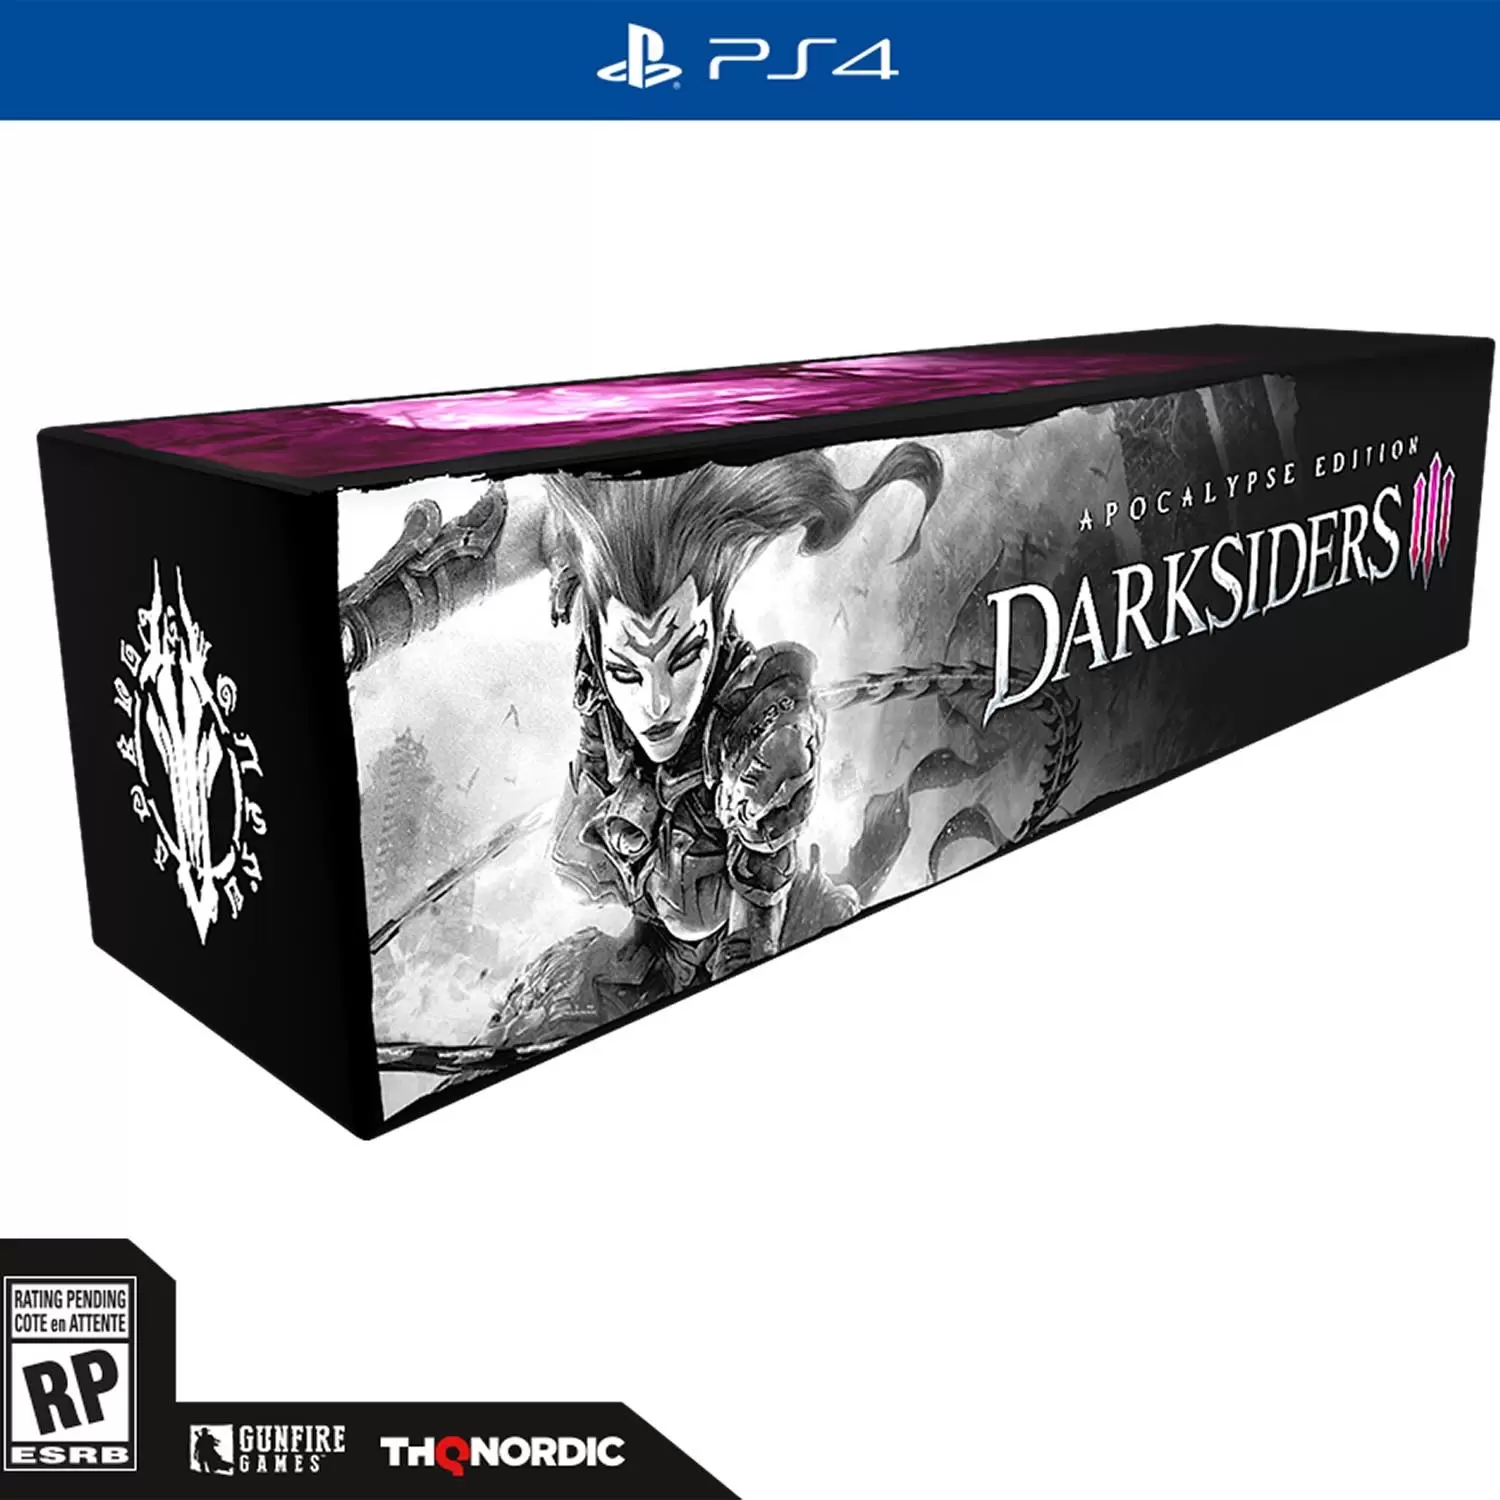 PS4 Games - Darksiders III - Apocalypse Edition